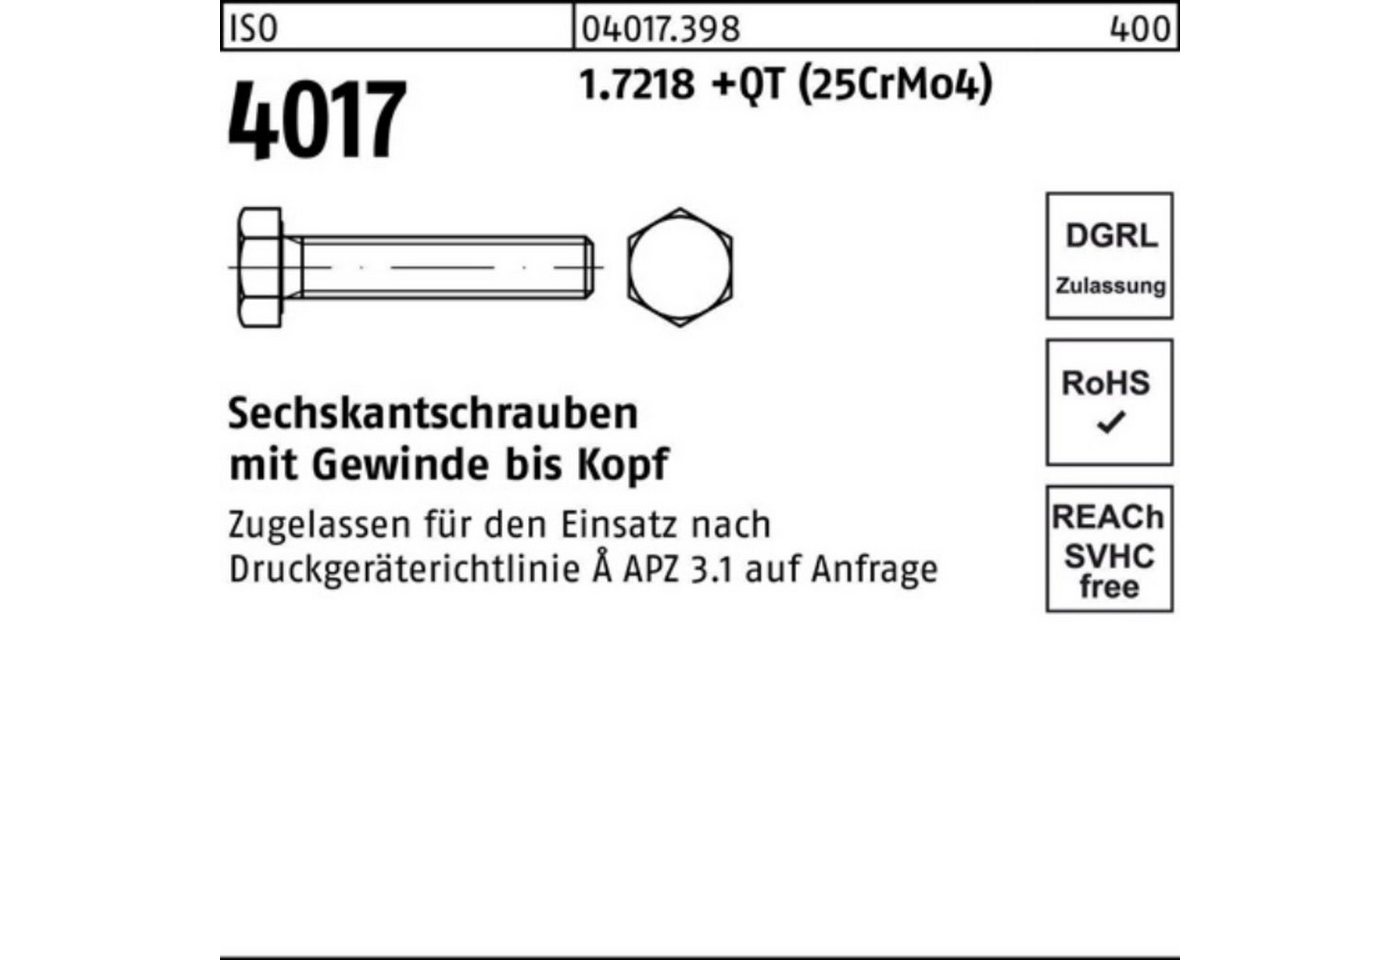 Bufab Sechskantschraube 100er Pack Sechskantschraube ISO 4017 VG M30x 140 1.7218 +QT (25CrMo4) von Bufab